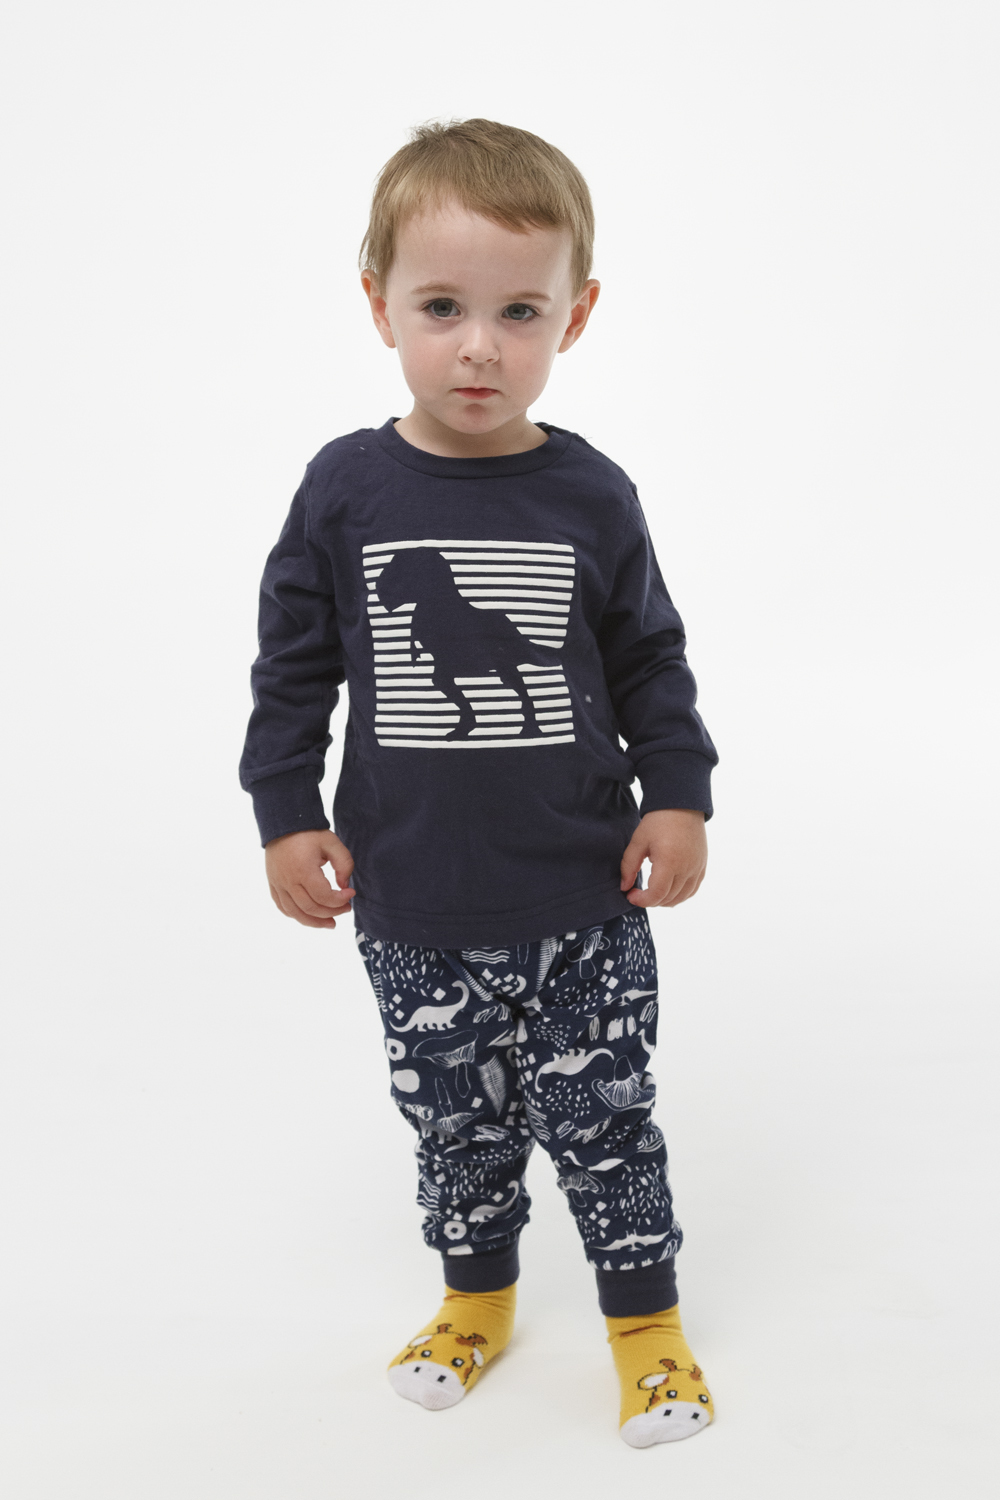 Pajamas for Boys Kid Clothes Dinosaur PJs Long Sleeve 4-Piece Sets Sleepwear 1-12 Years 